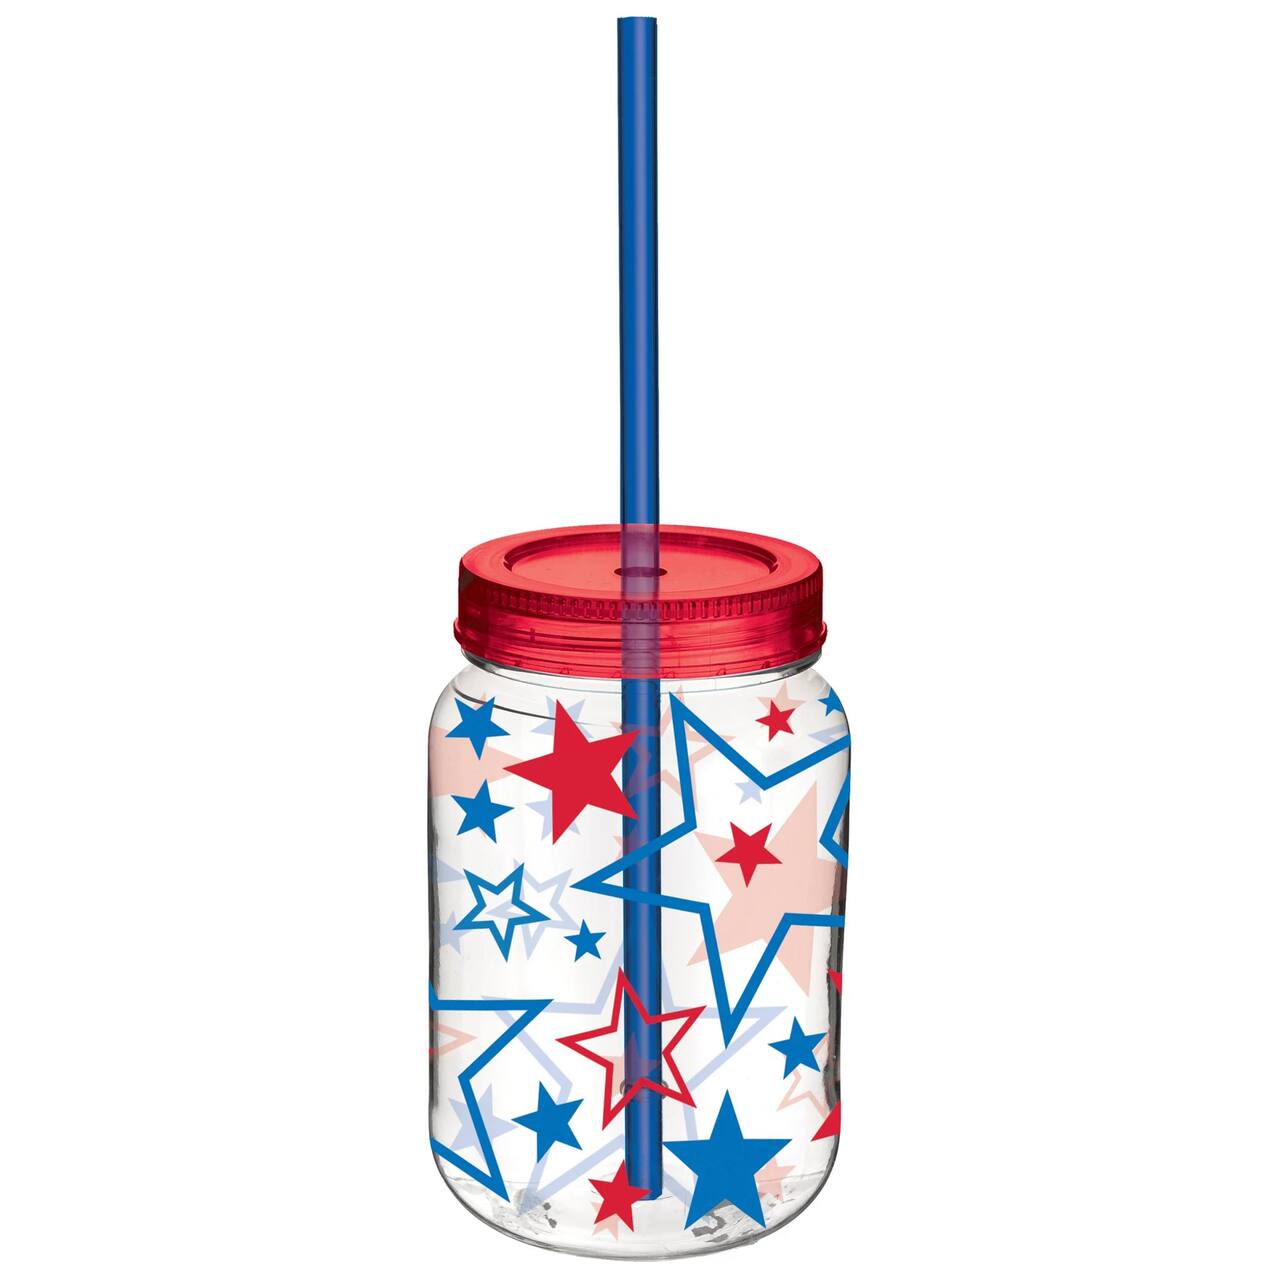 16oz. Patriotic Mason Jar Cups with Straws, 6ct.